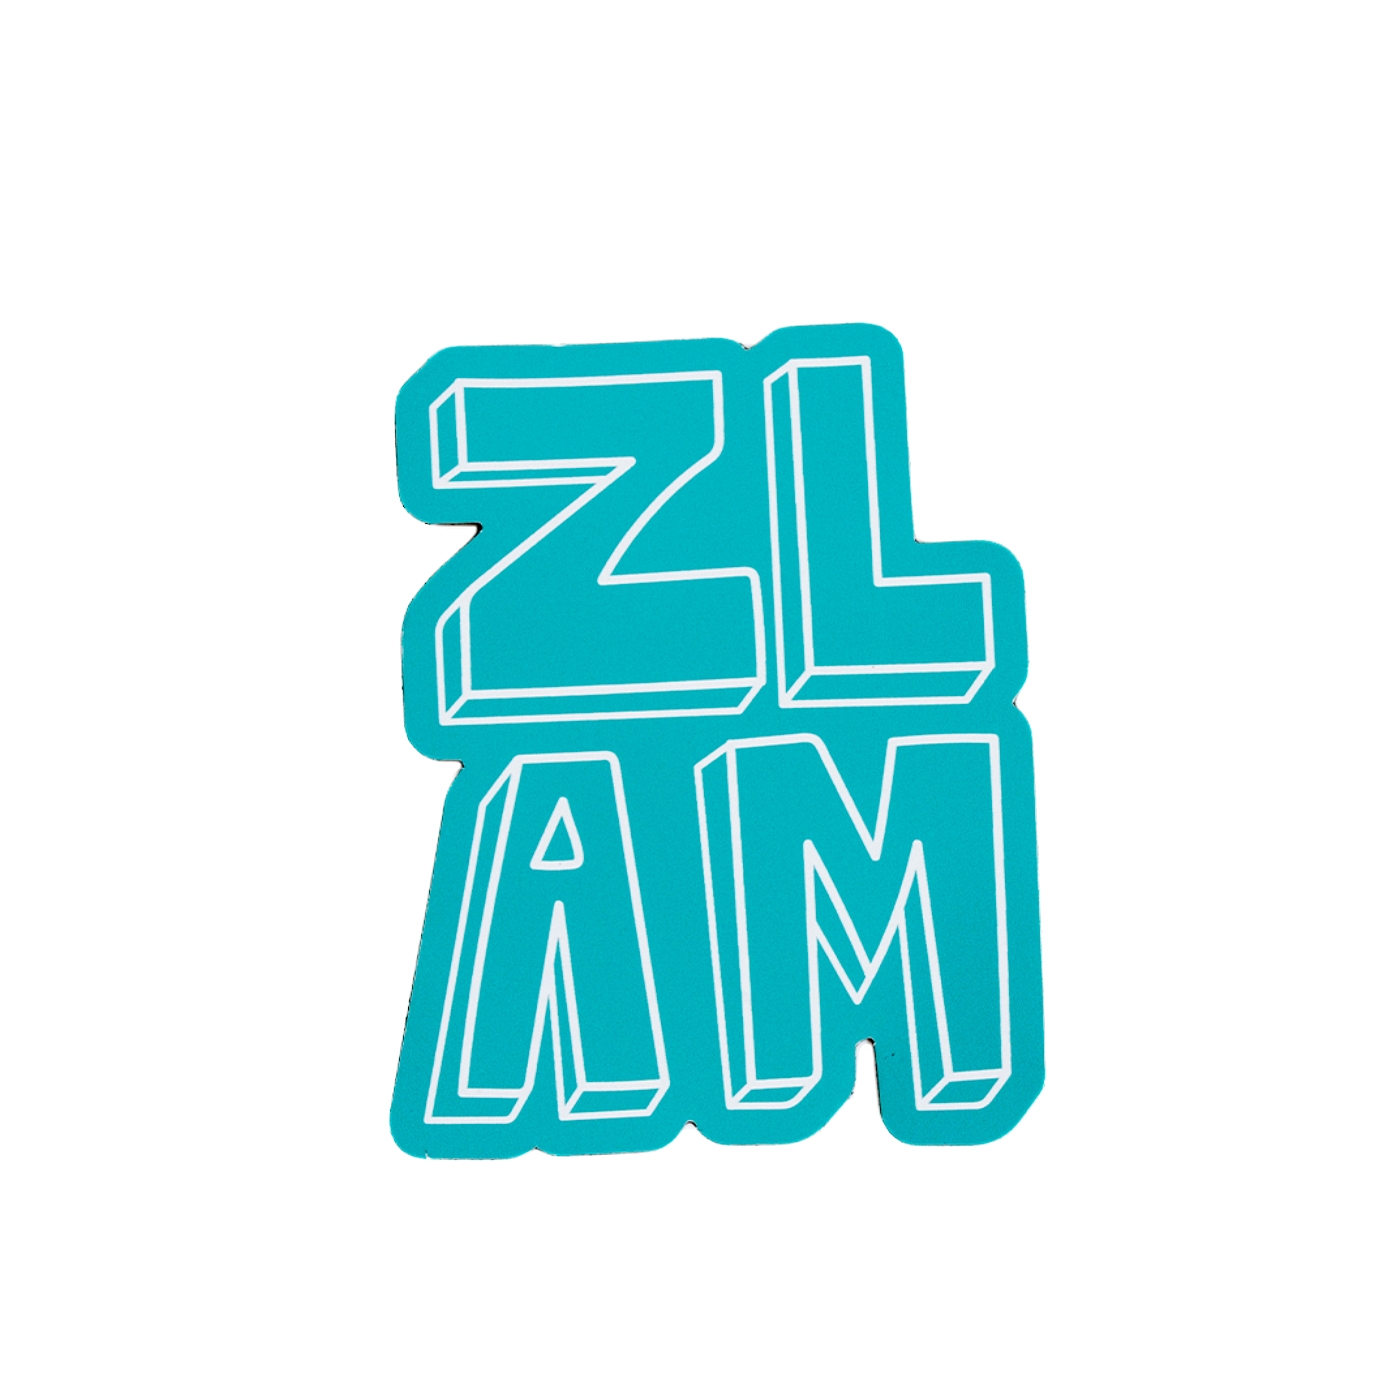 Zeta Tau Alpha ZLAM Magnet